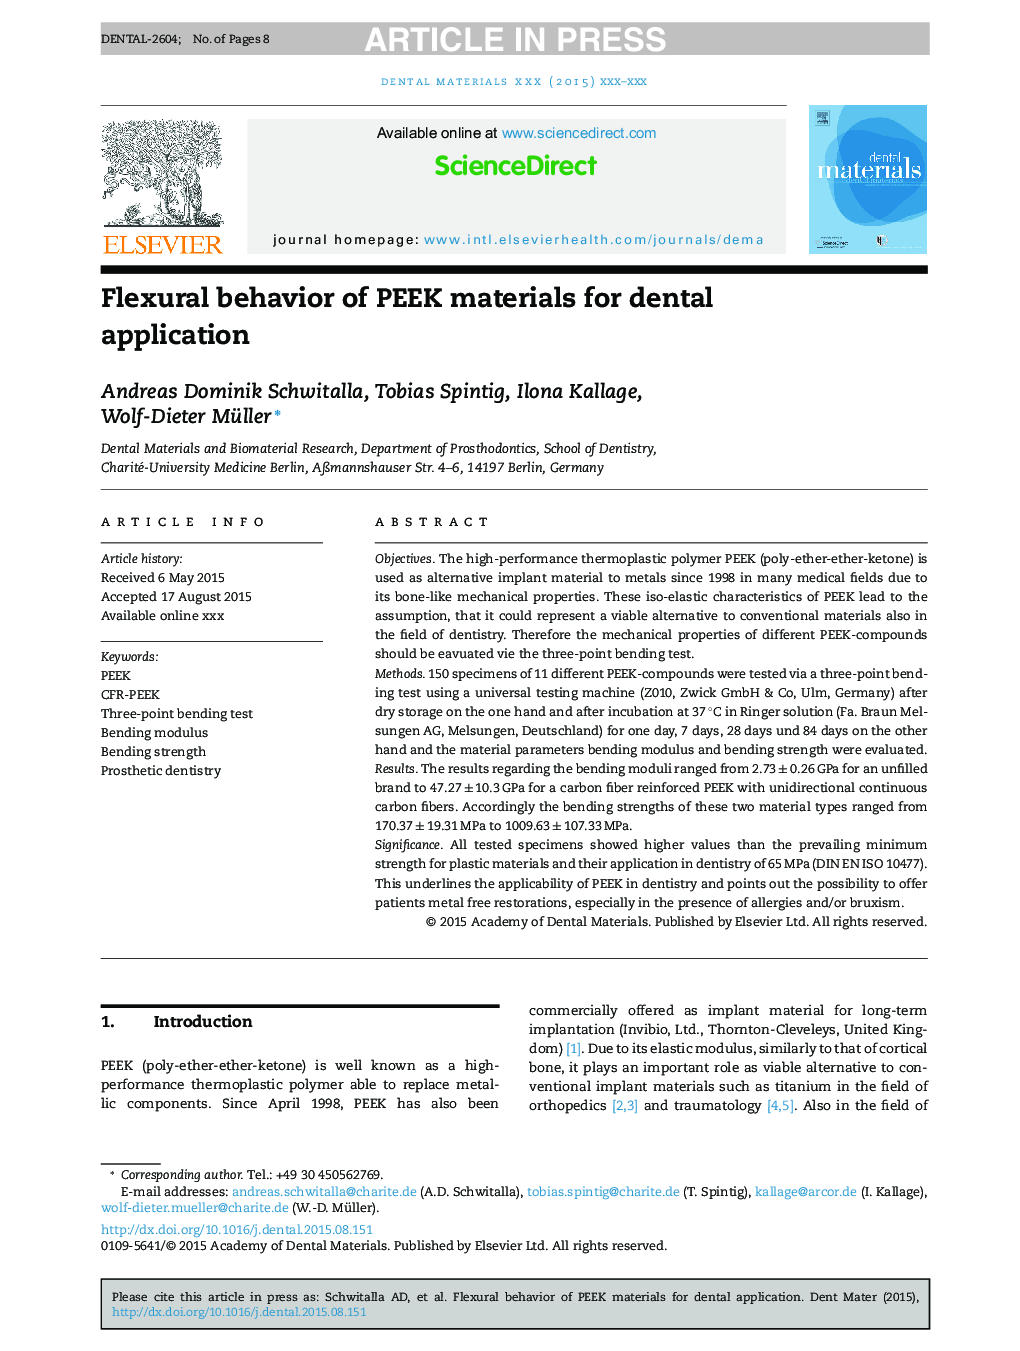 Flexural behavior of PEEK materials for dental application